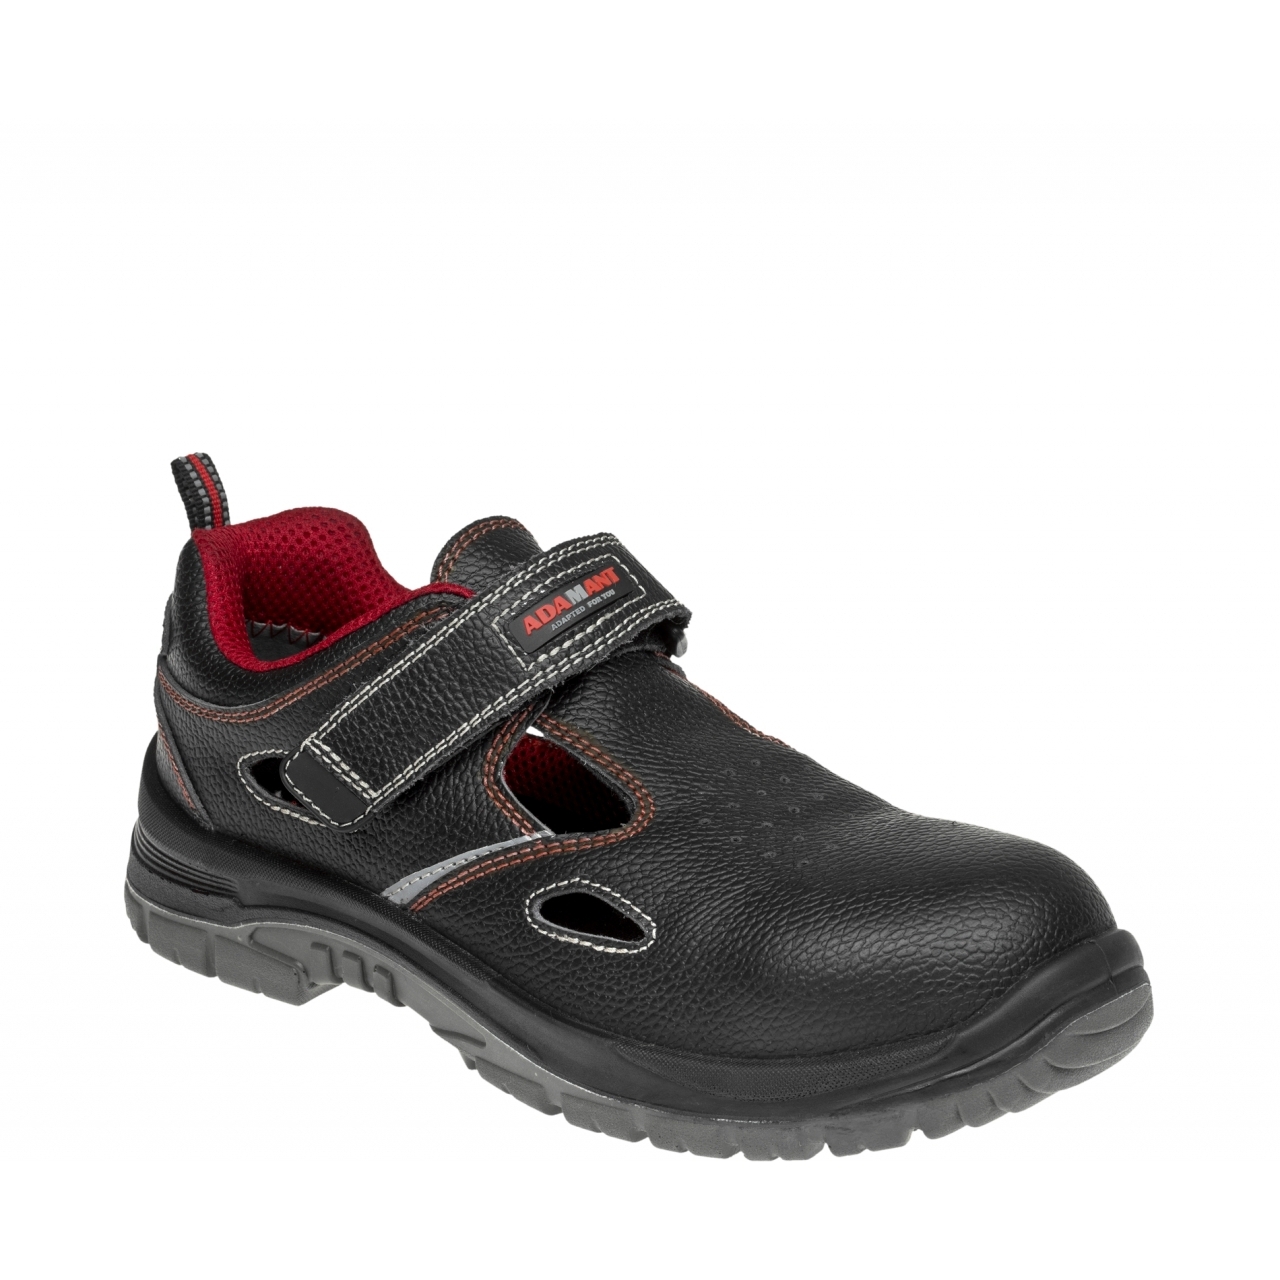 Sandále Bennon Non Metallic S1 - černé, 39